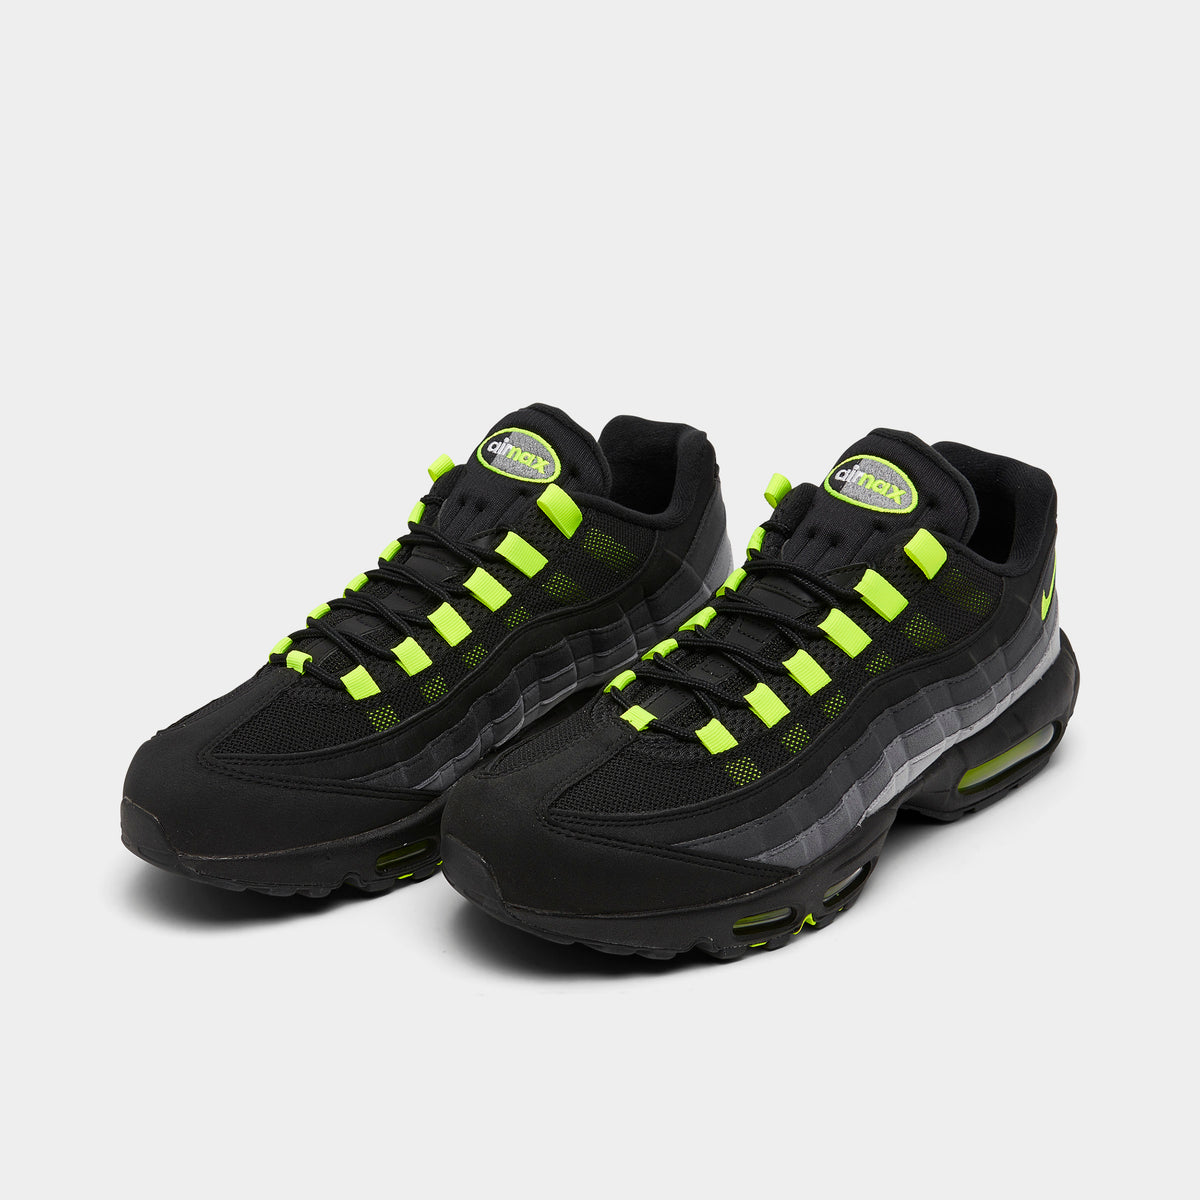 Nike Air Max 95 Black / Volt - Anthracite